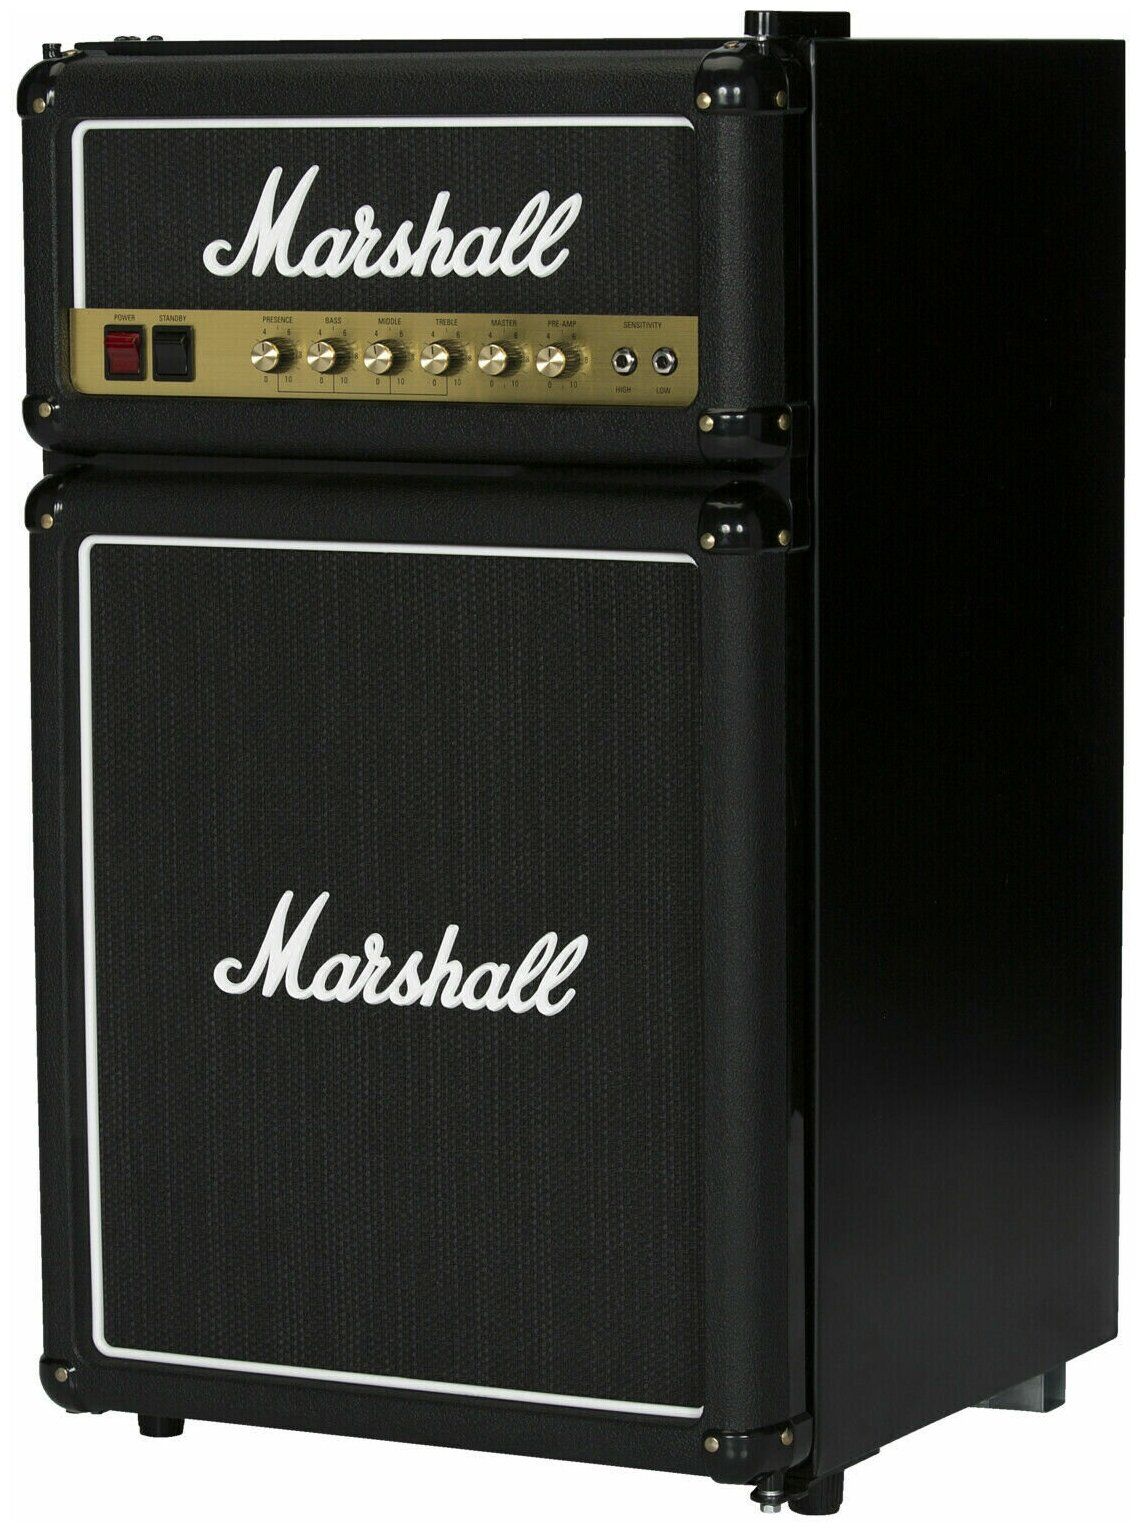 Холодильник Marshall Black Edition 3.2 черный— фото №2